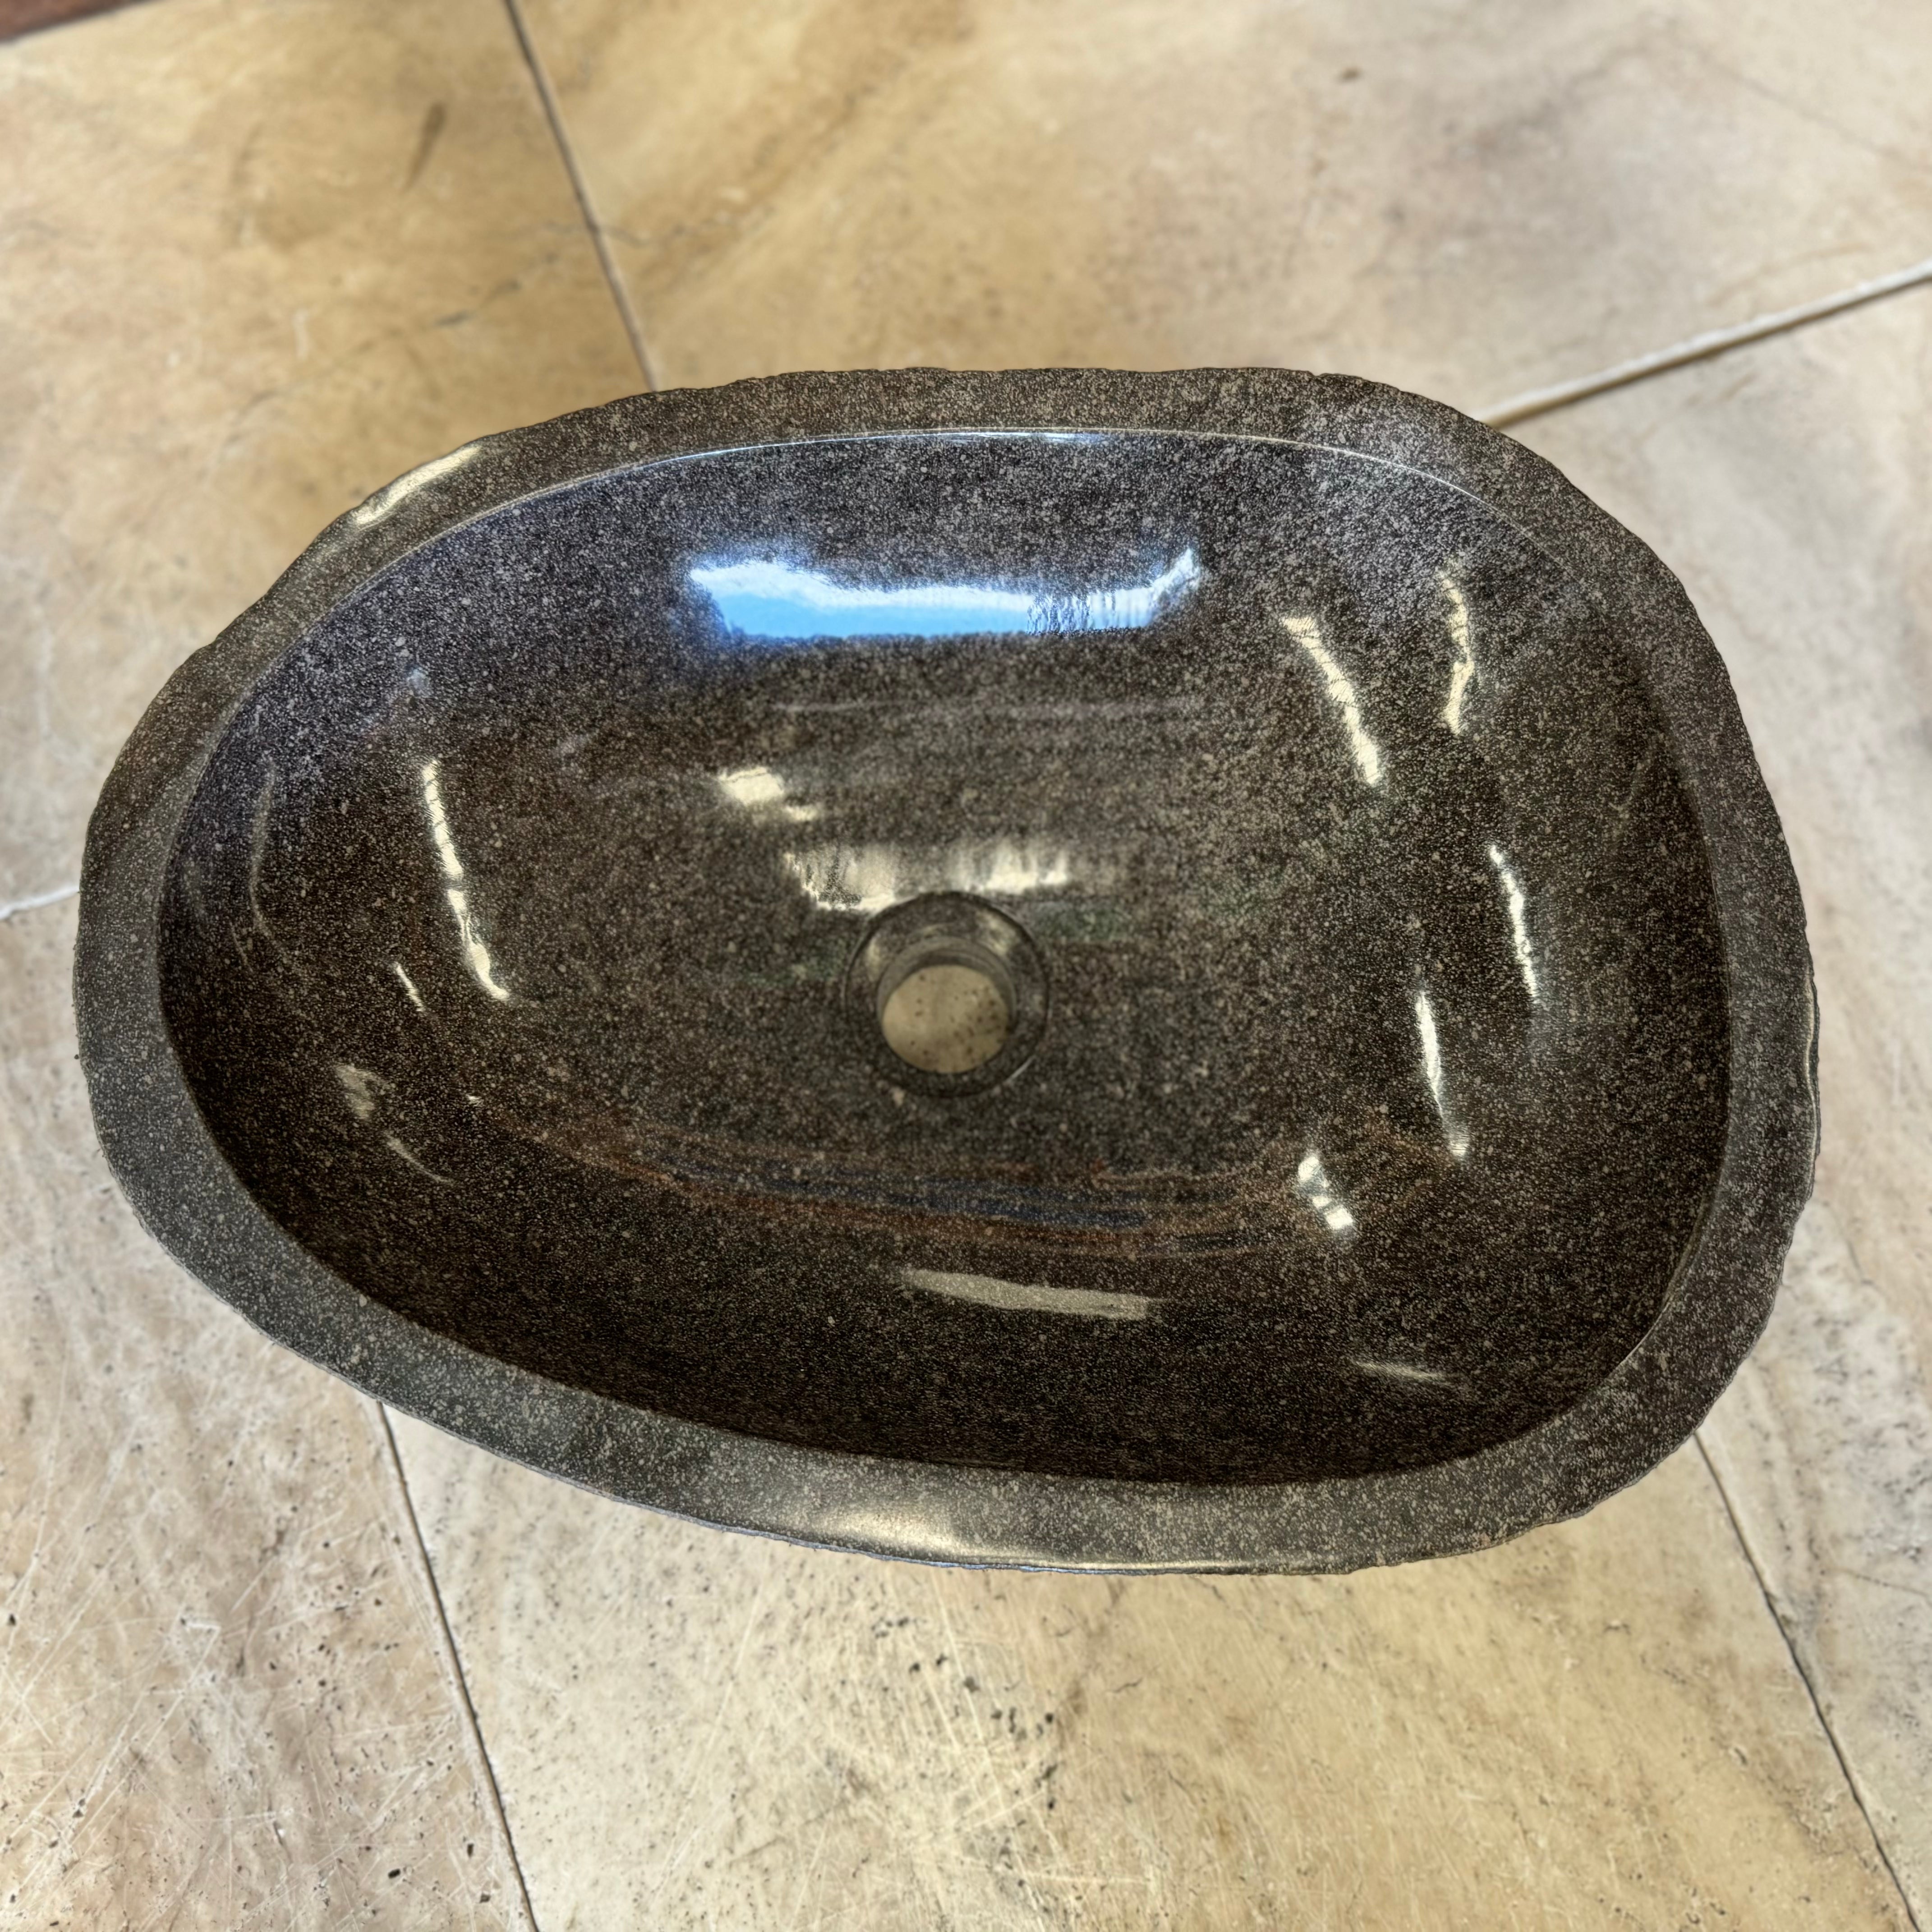 Handmade Natural Oval River Stone Bathroom Basin - RM2306021